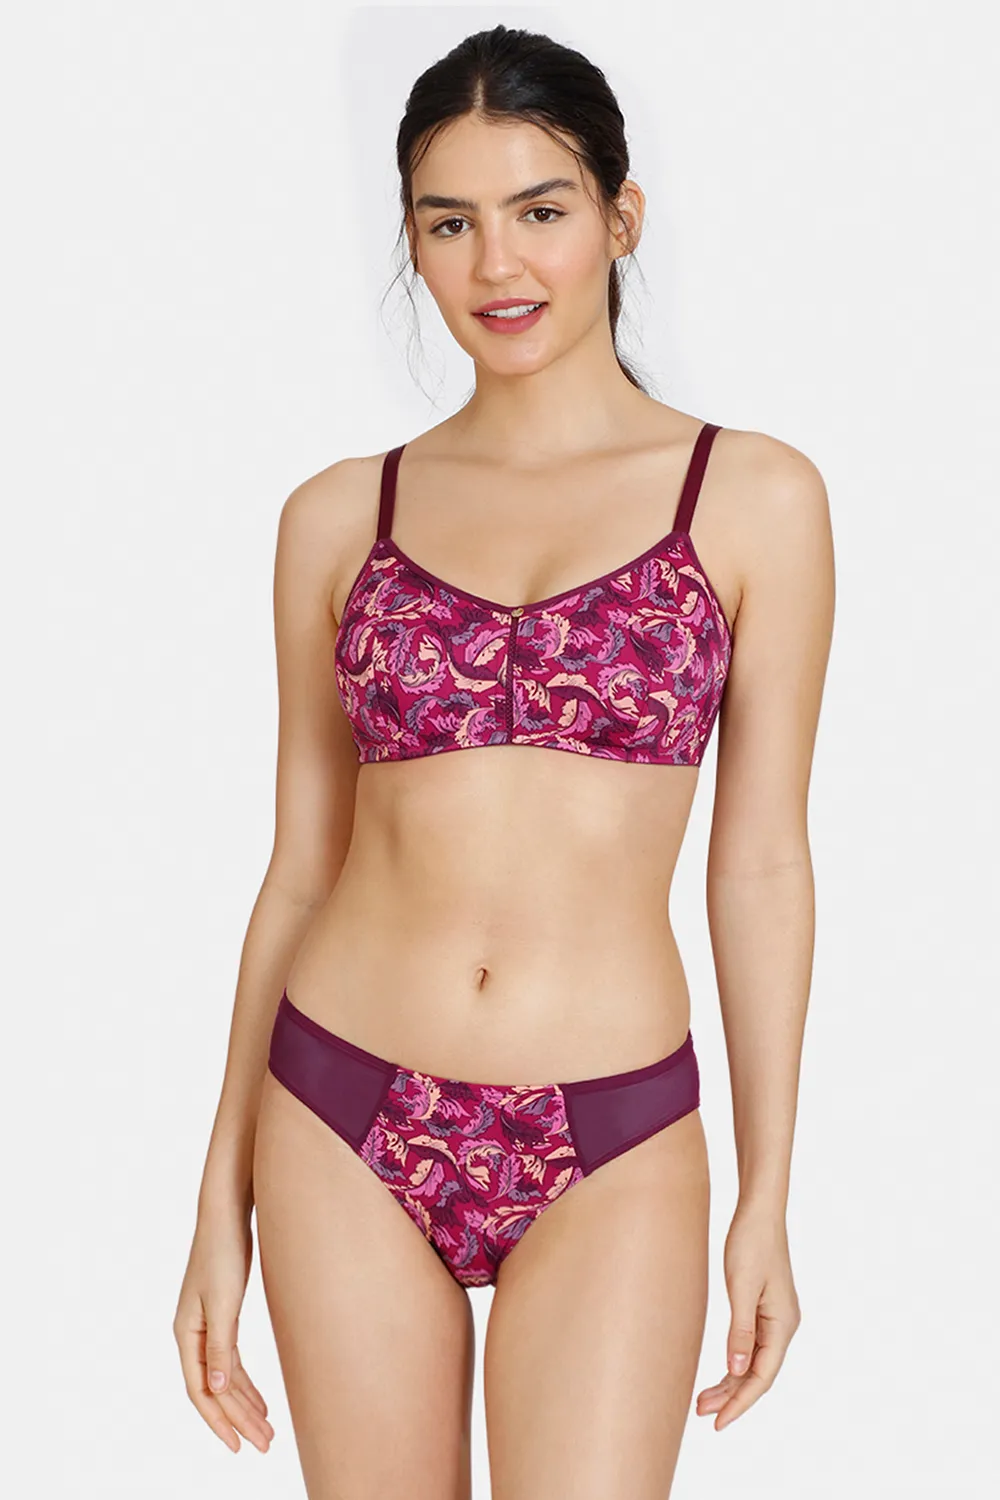 https://cdn.zivame.com/ik-seo/media/catalog/product/1/_/1_57_6/zivame-plush-mystique-double-layered-non-wired-3-4th-coverage-t-shirt-bra-with-bikini-panty-dark-purple.jpg